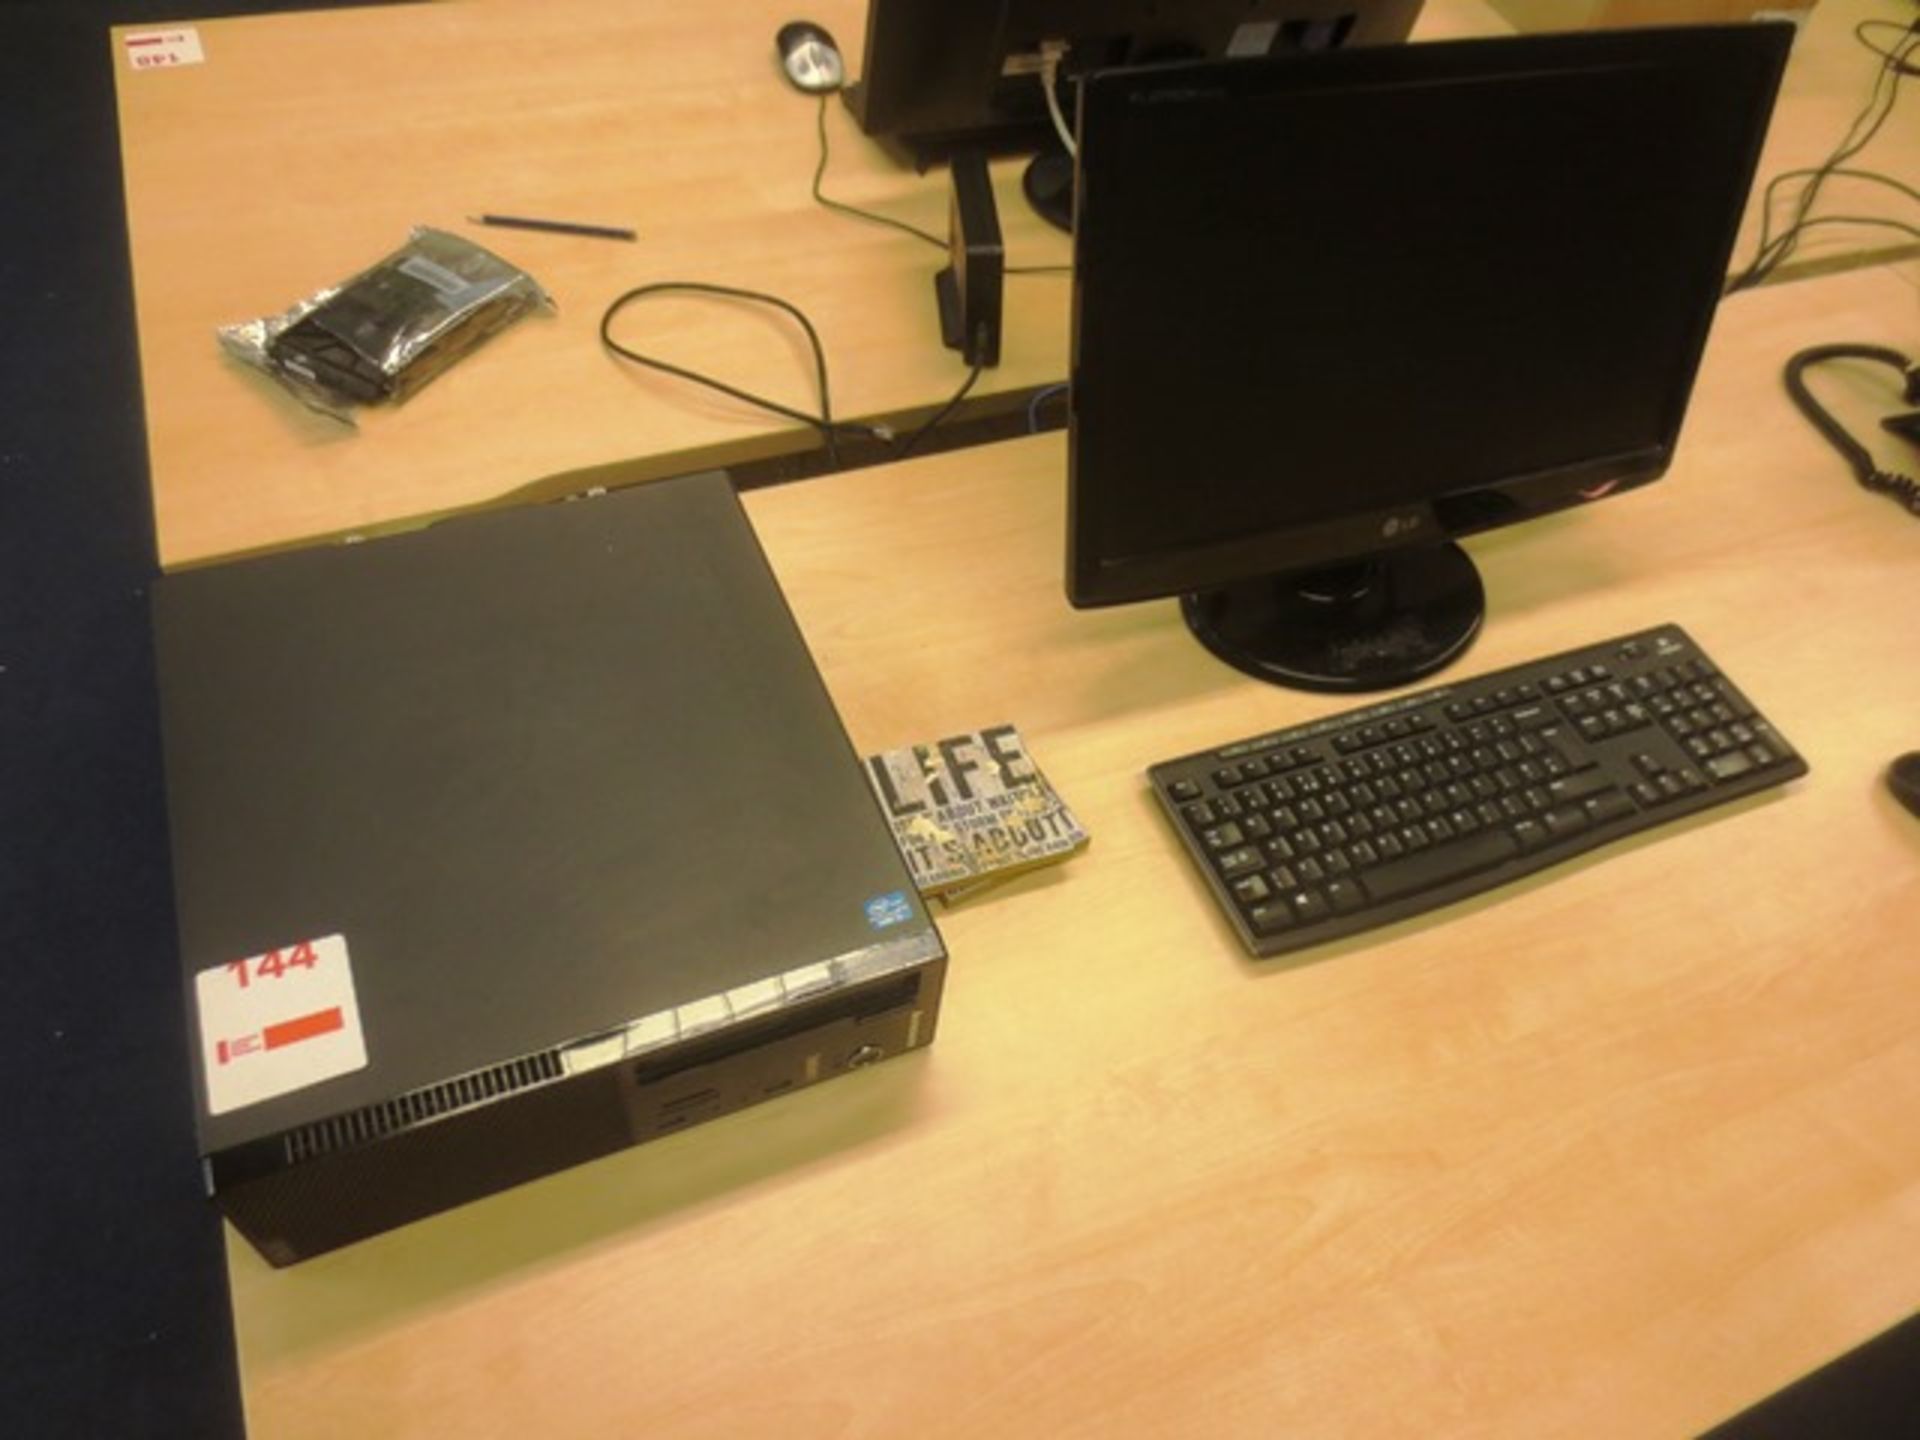 Lenovo Thinkcentre desktop PC, LG LCD flat screen monitor, keyboard, mouse (please note: no hard